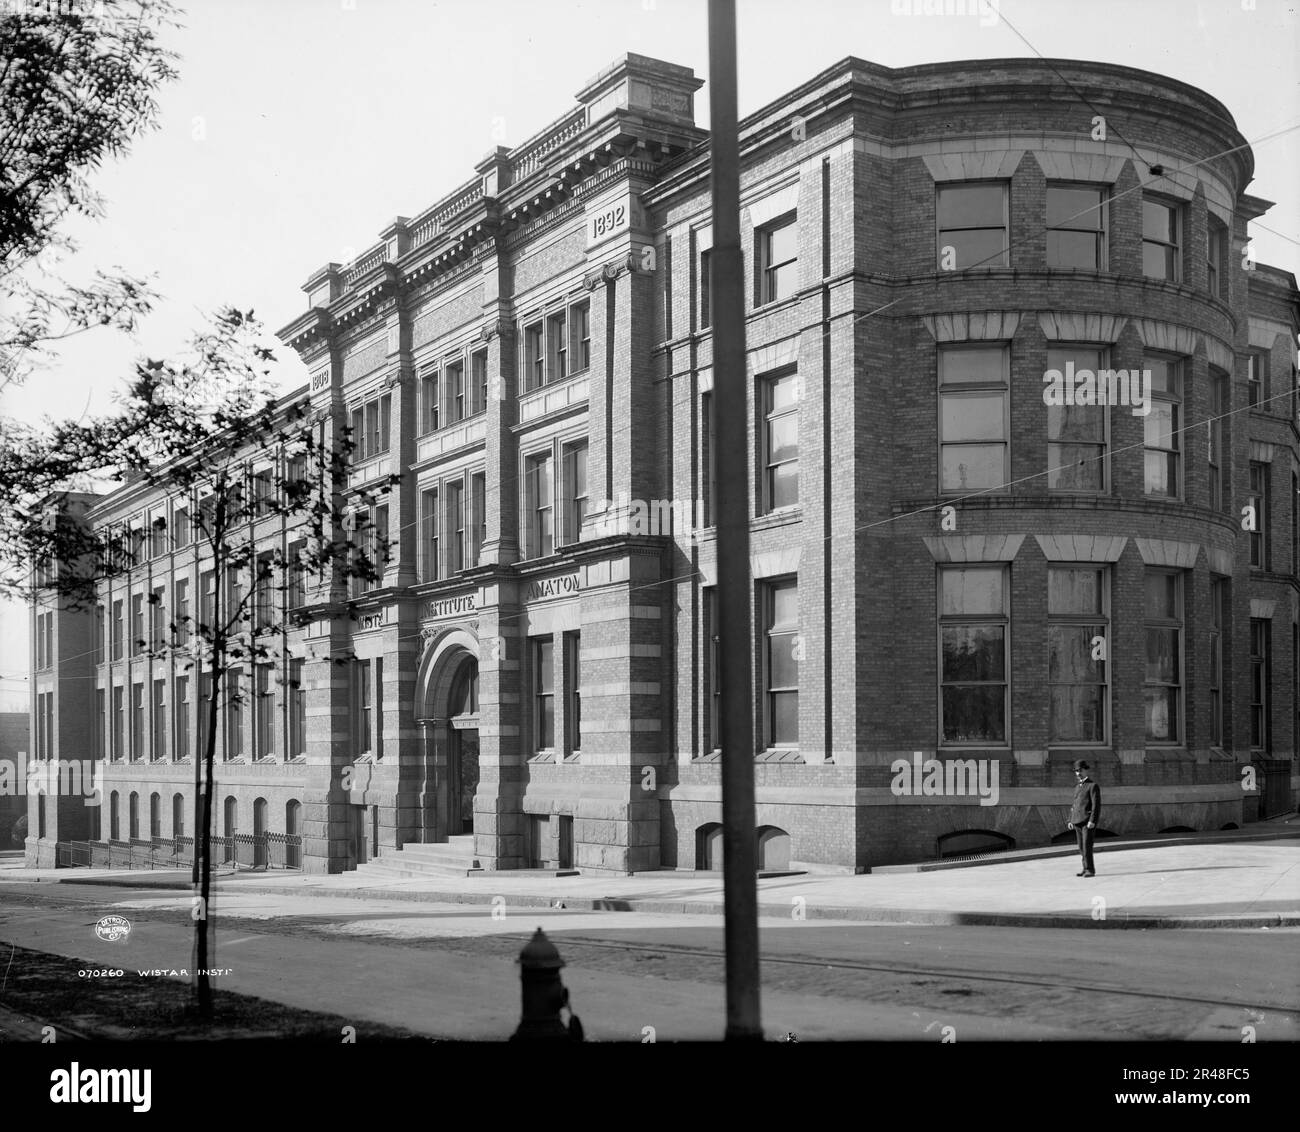 Wistar Institute of Anatomy, U. of Pa., Philadelphia, Pa., between 1900 and 1910. University of Pennsylvania. Stock Photo